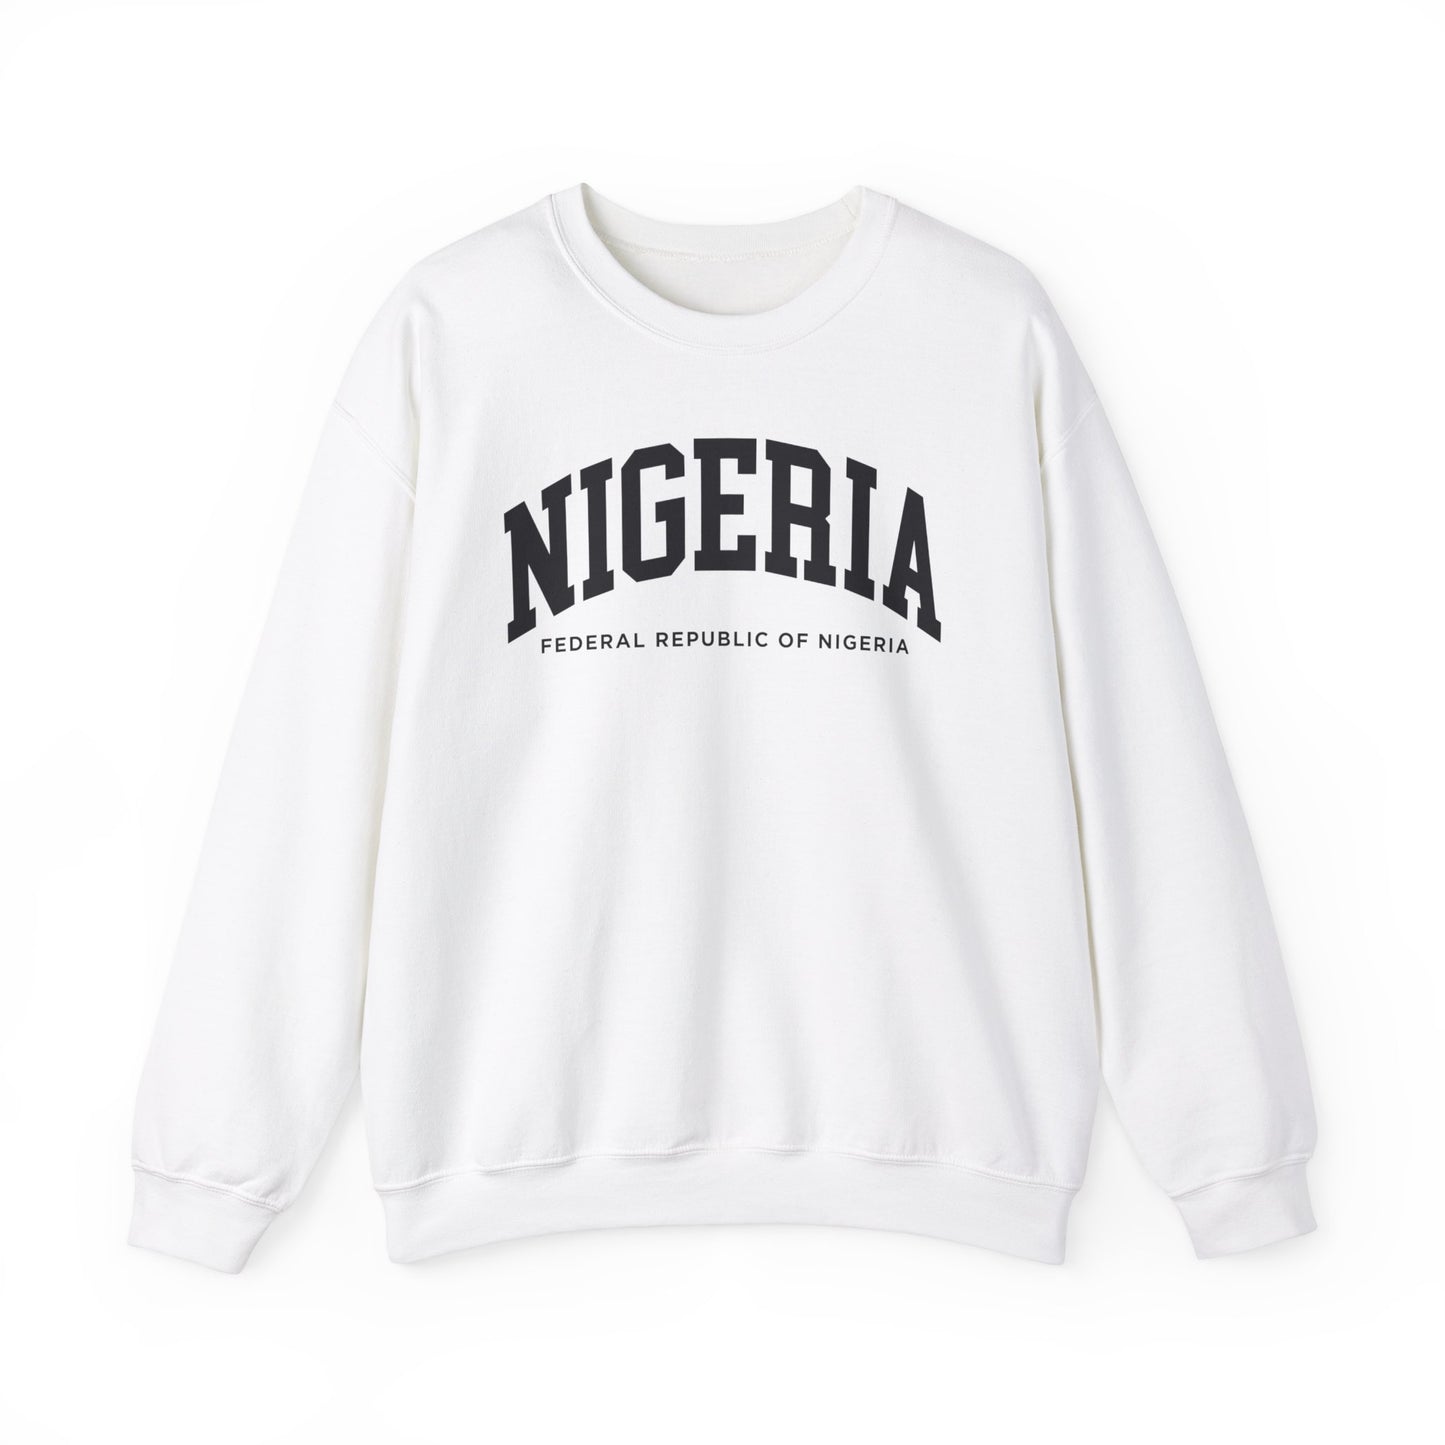 Nigeria Sweatshirt